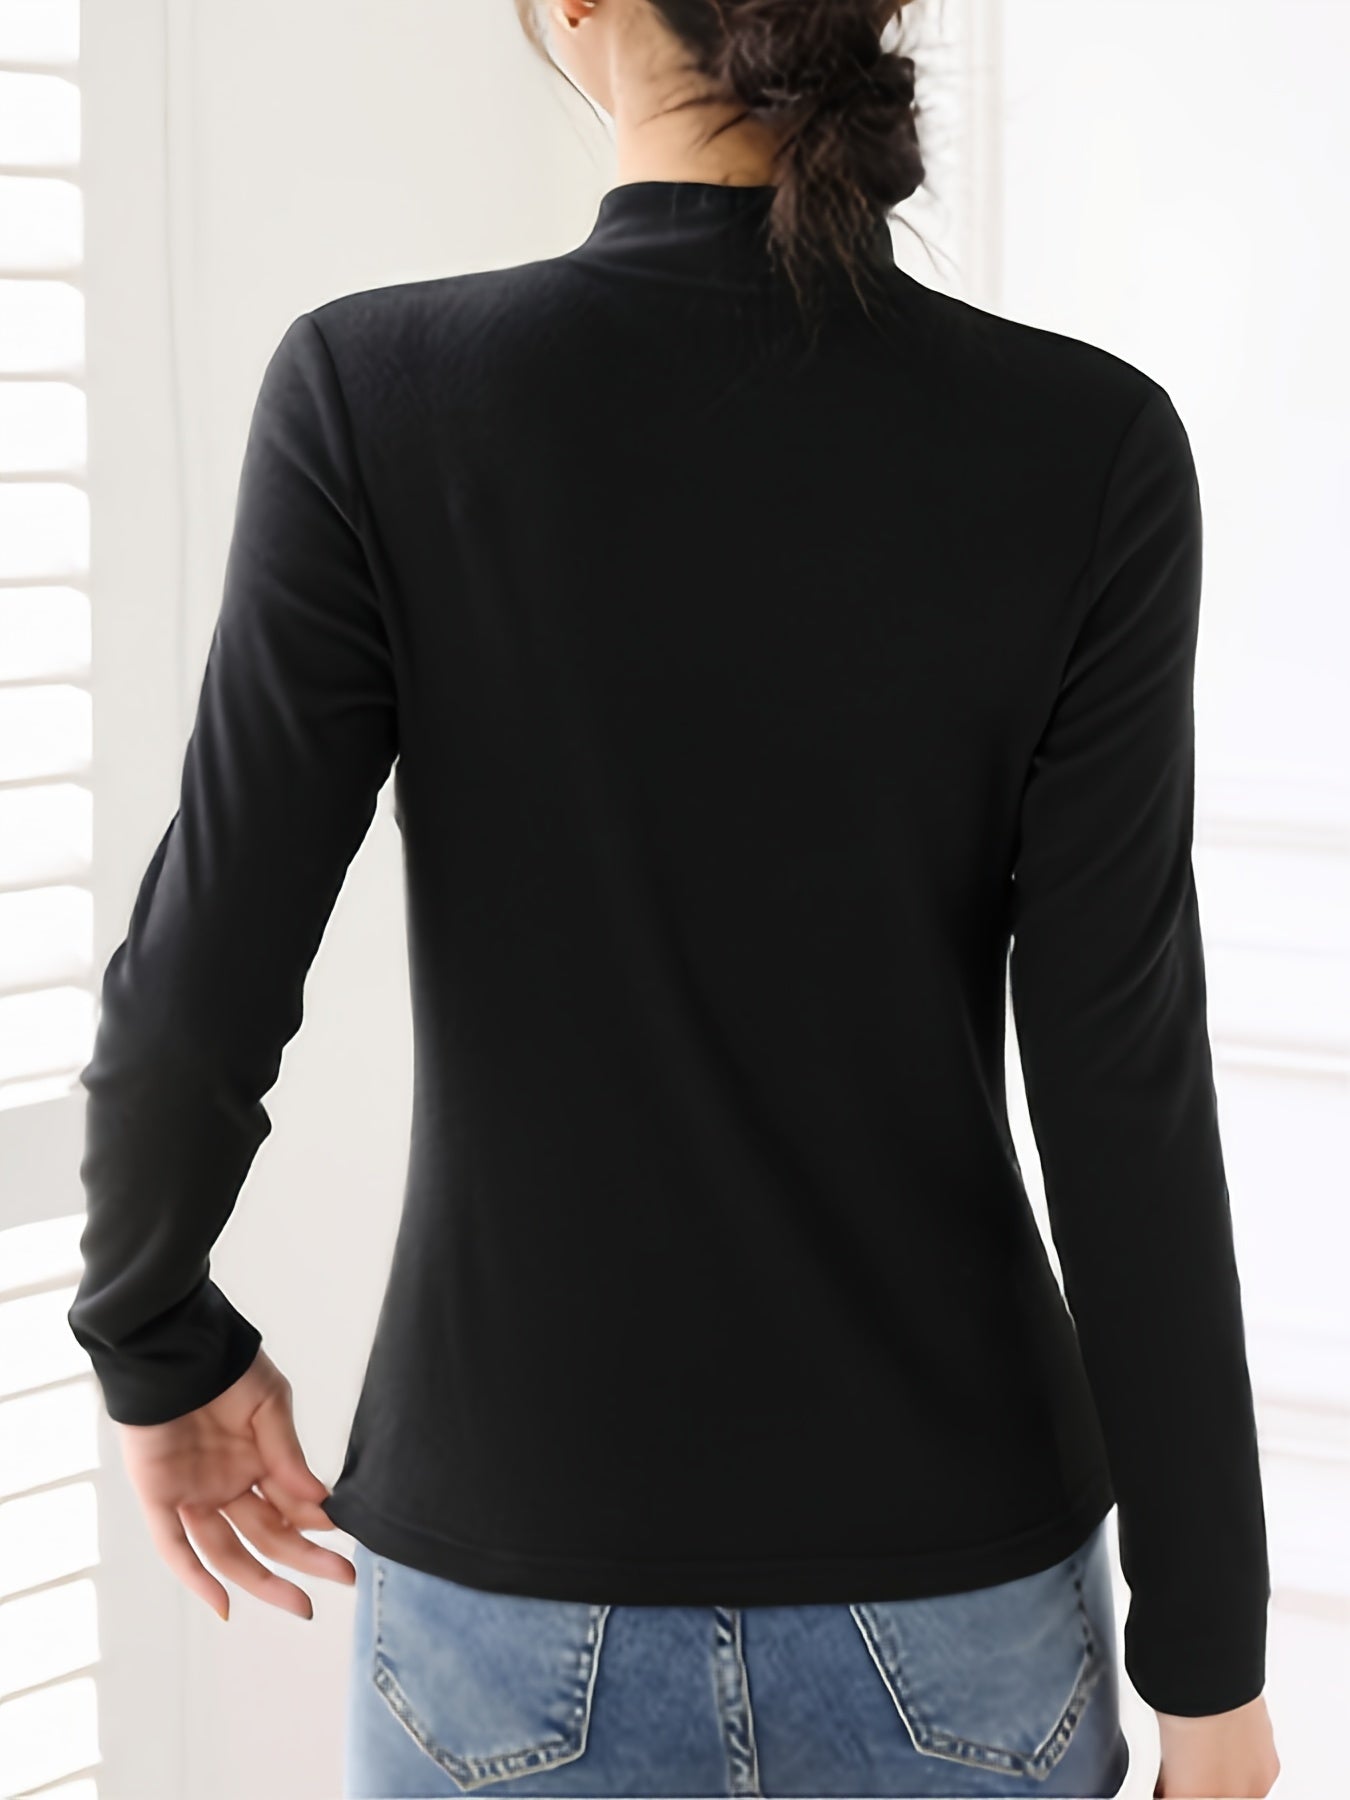 Antmvs Simple Solid Thermal Underwear, Soft & Comfortable Long Sleeve Plush Top, Women's Lingerie & Sleepwear